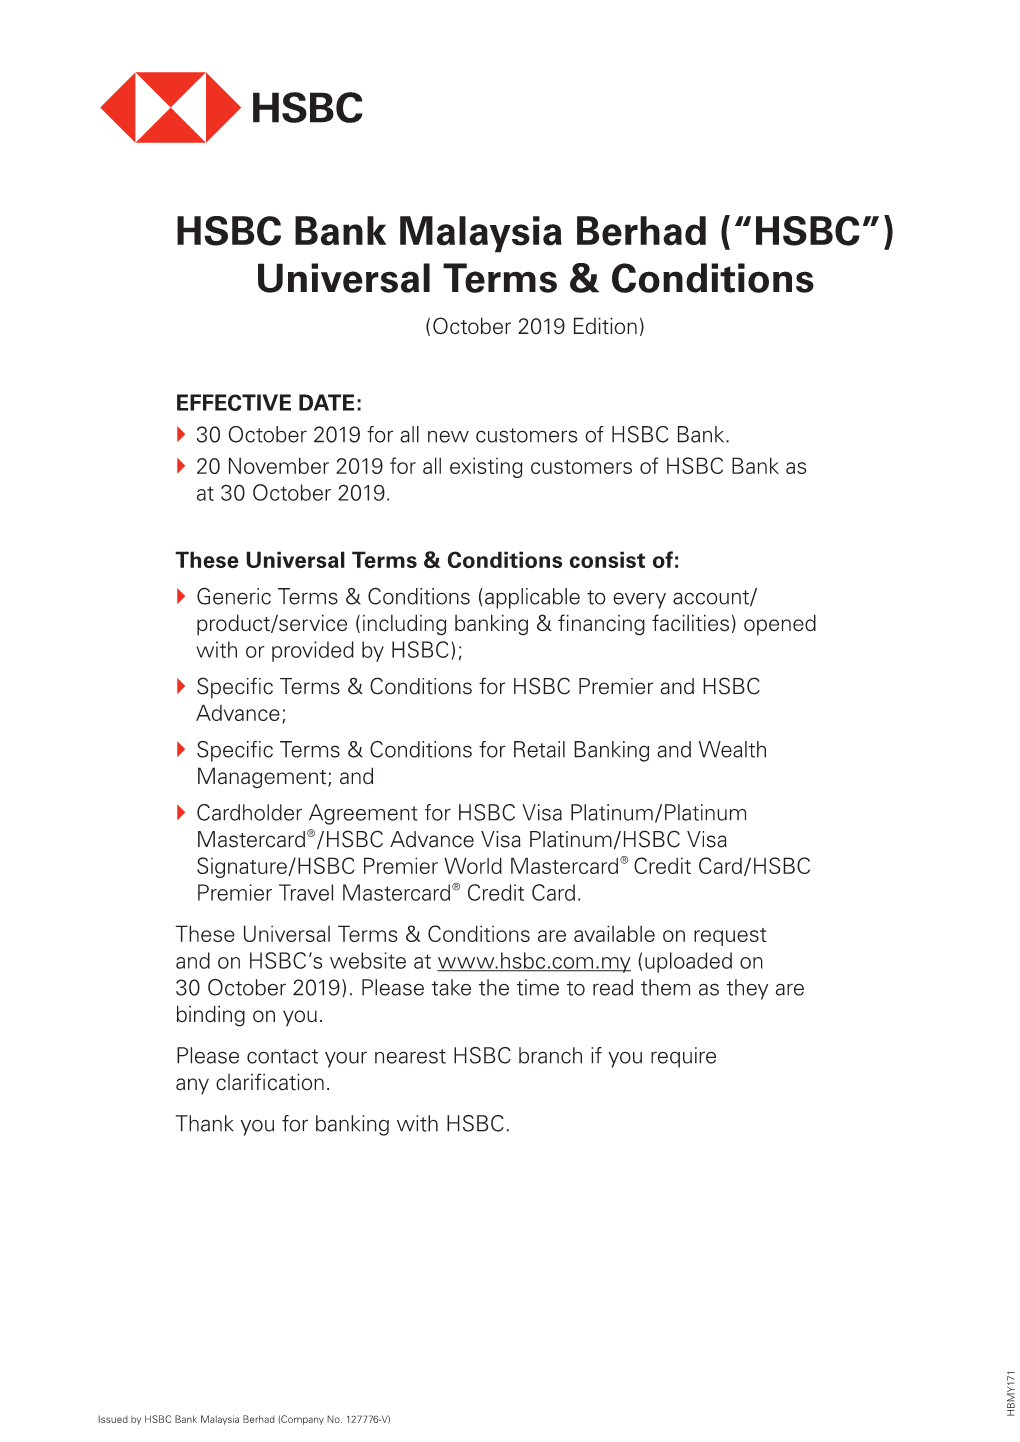 HSBC Bank Malaysia Berhad (“HSBC”) Universal Terms & Conditions (October 2019 Edition)